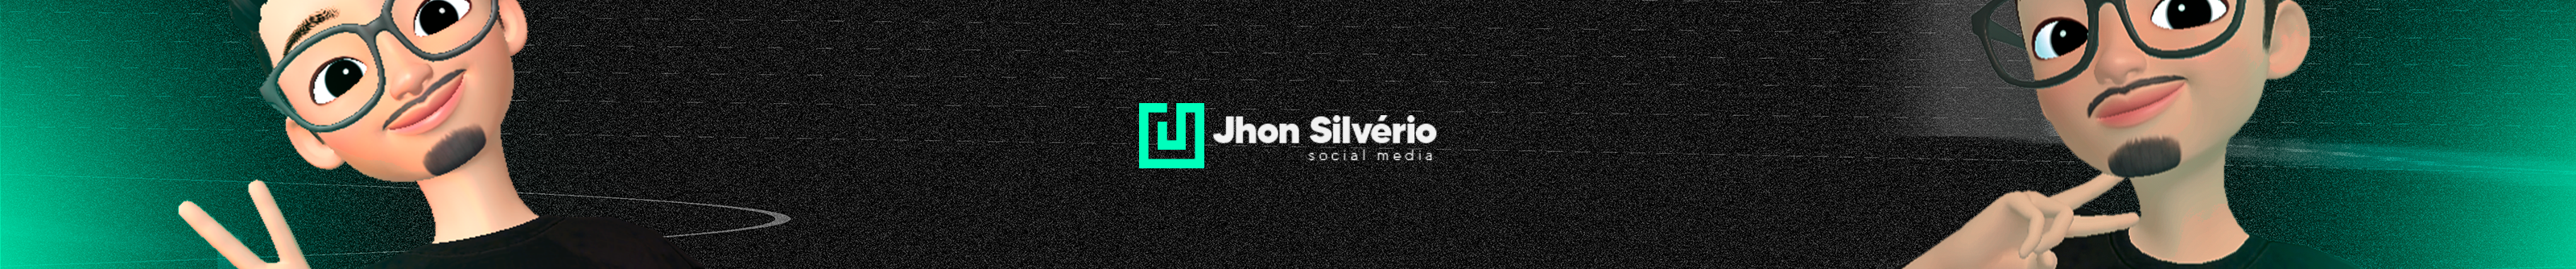 Profilbanneret til Jhon Silvério